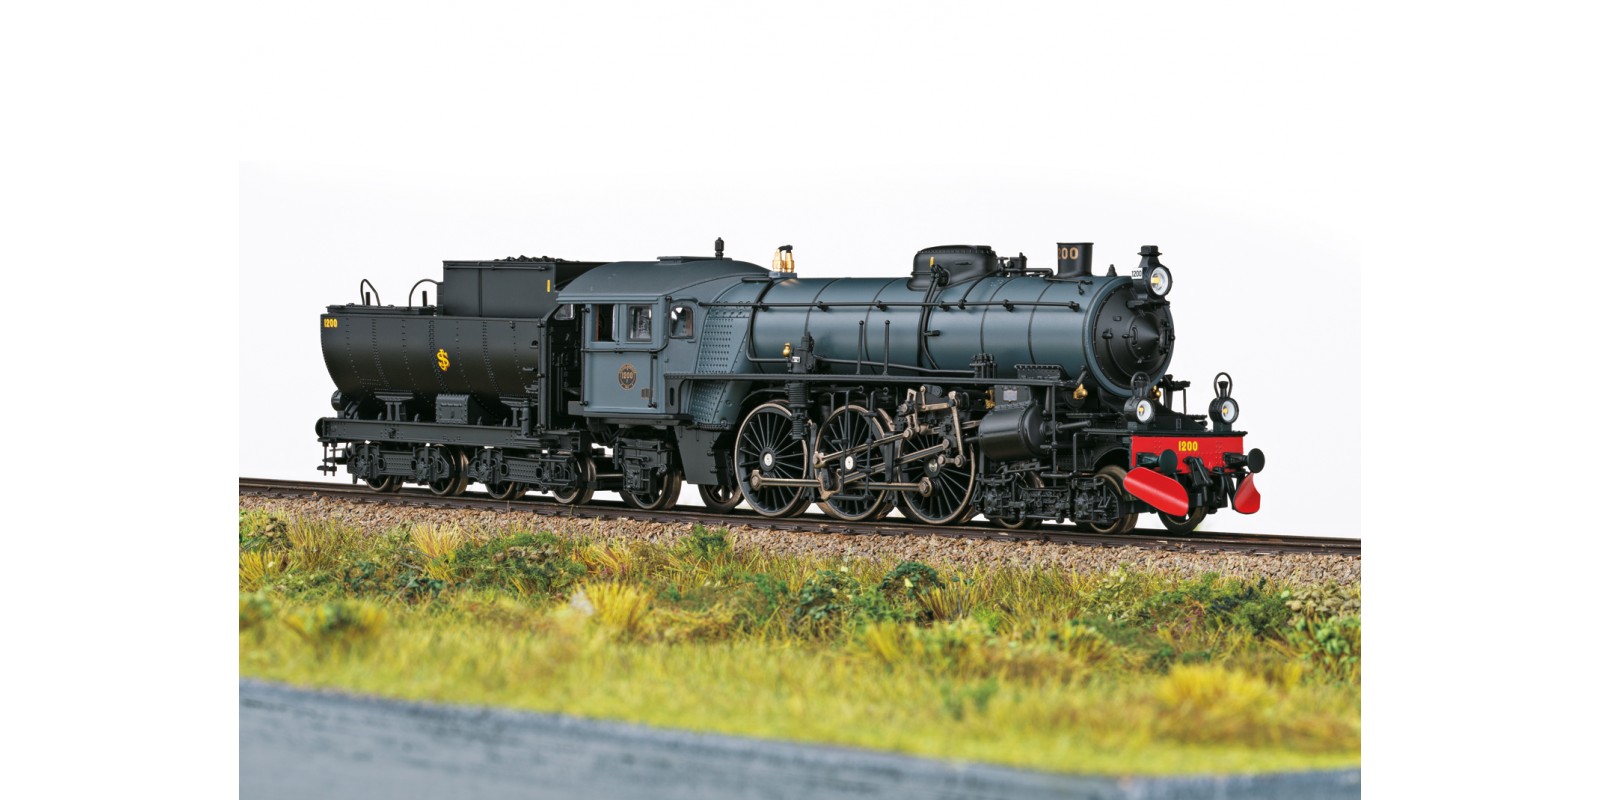 T25490 Class F 1200 Steam Locomotive